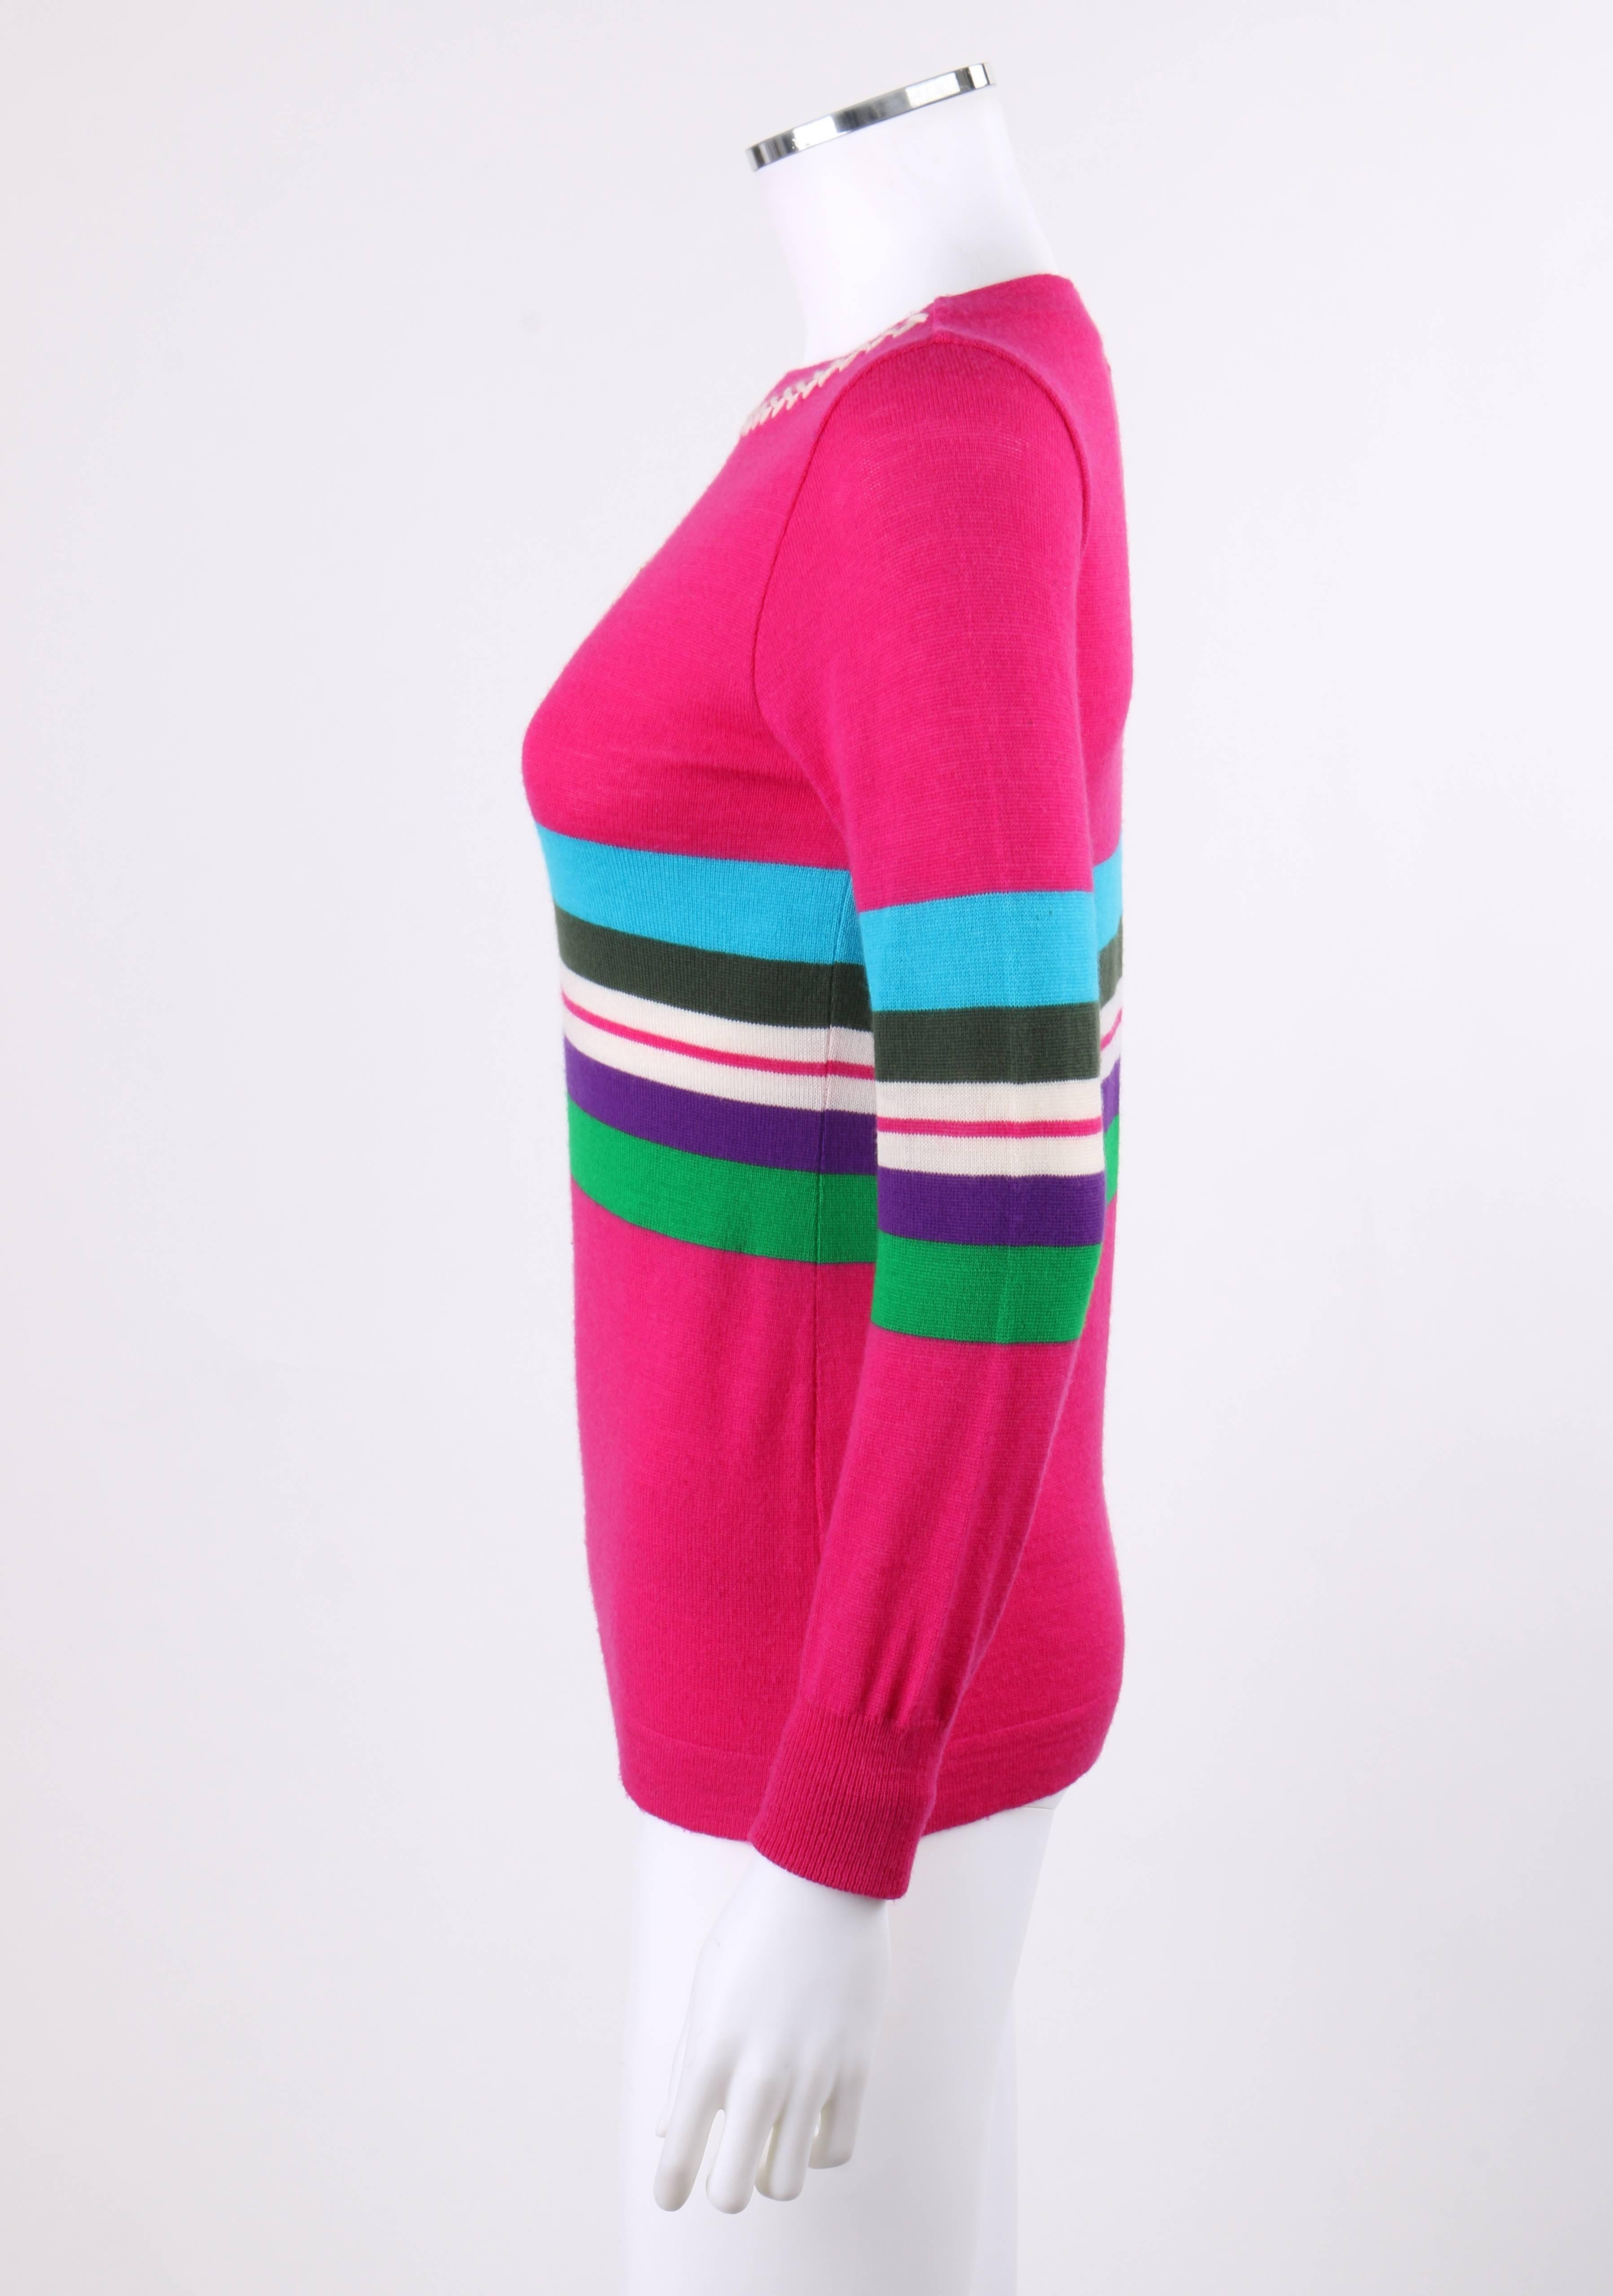 Women's EMILIO PUCCI c.1970's Fuchsia Pink Wool Striped Knit Sweater Crewneck Top